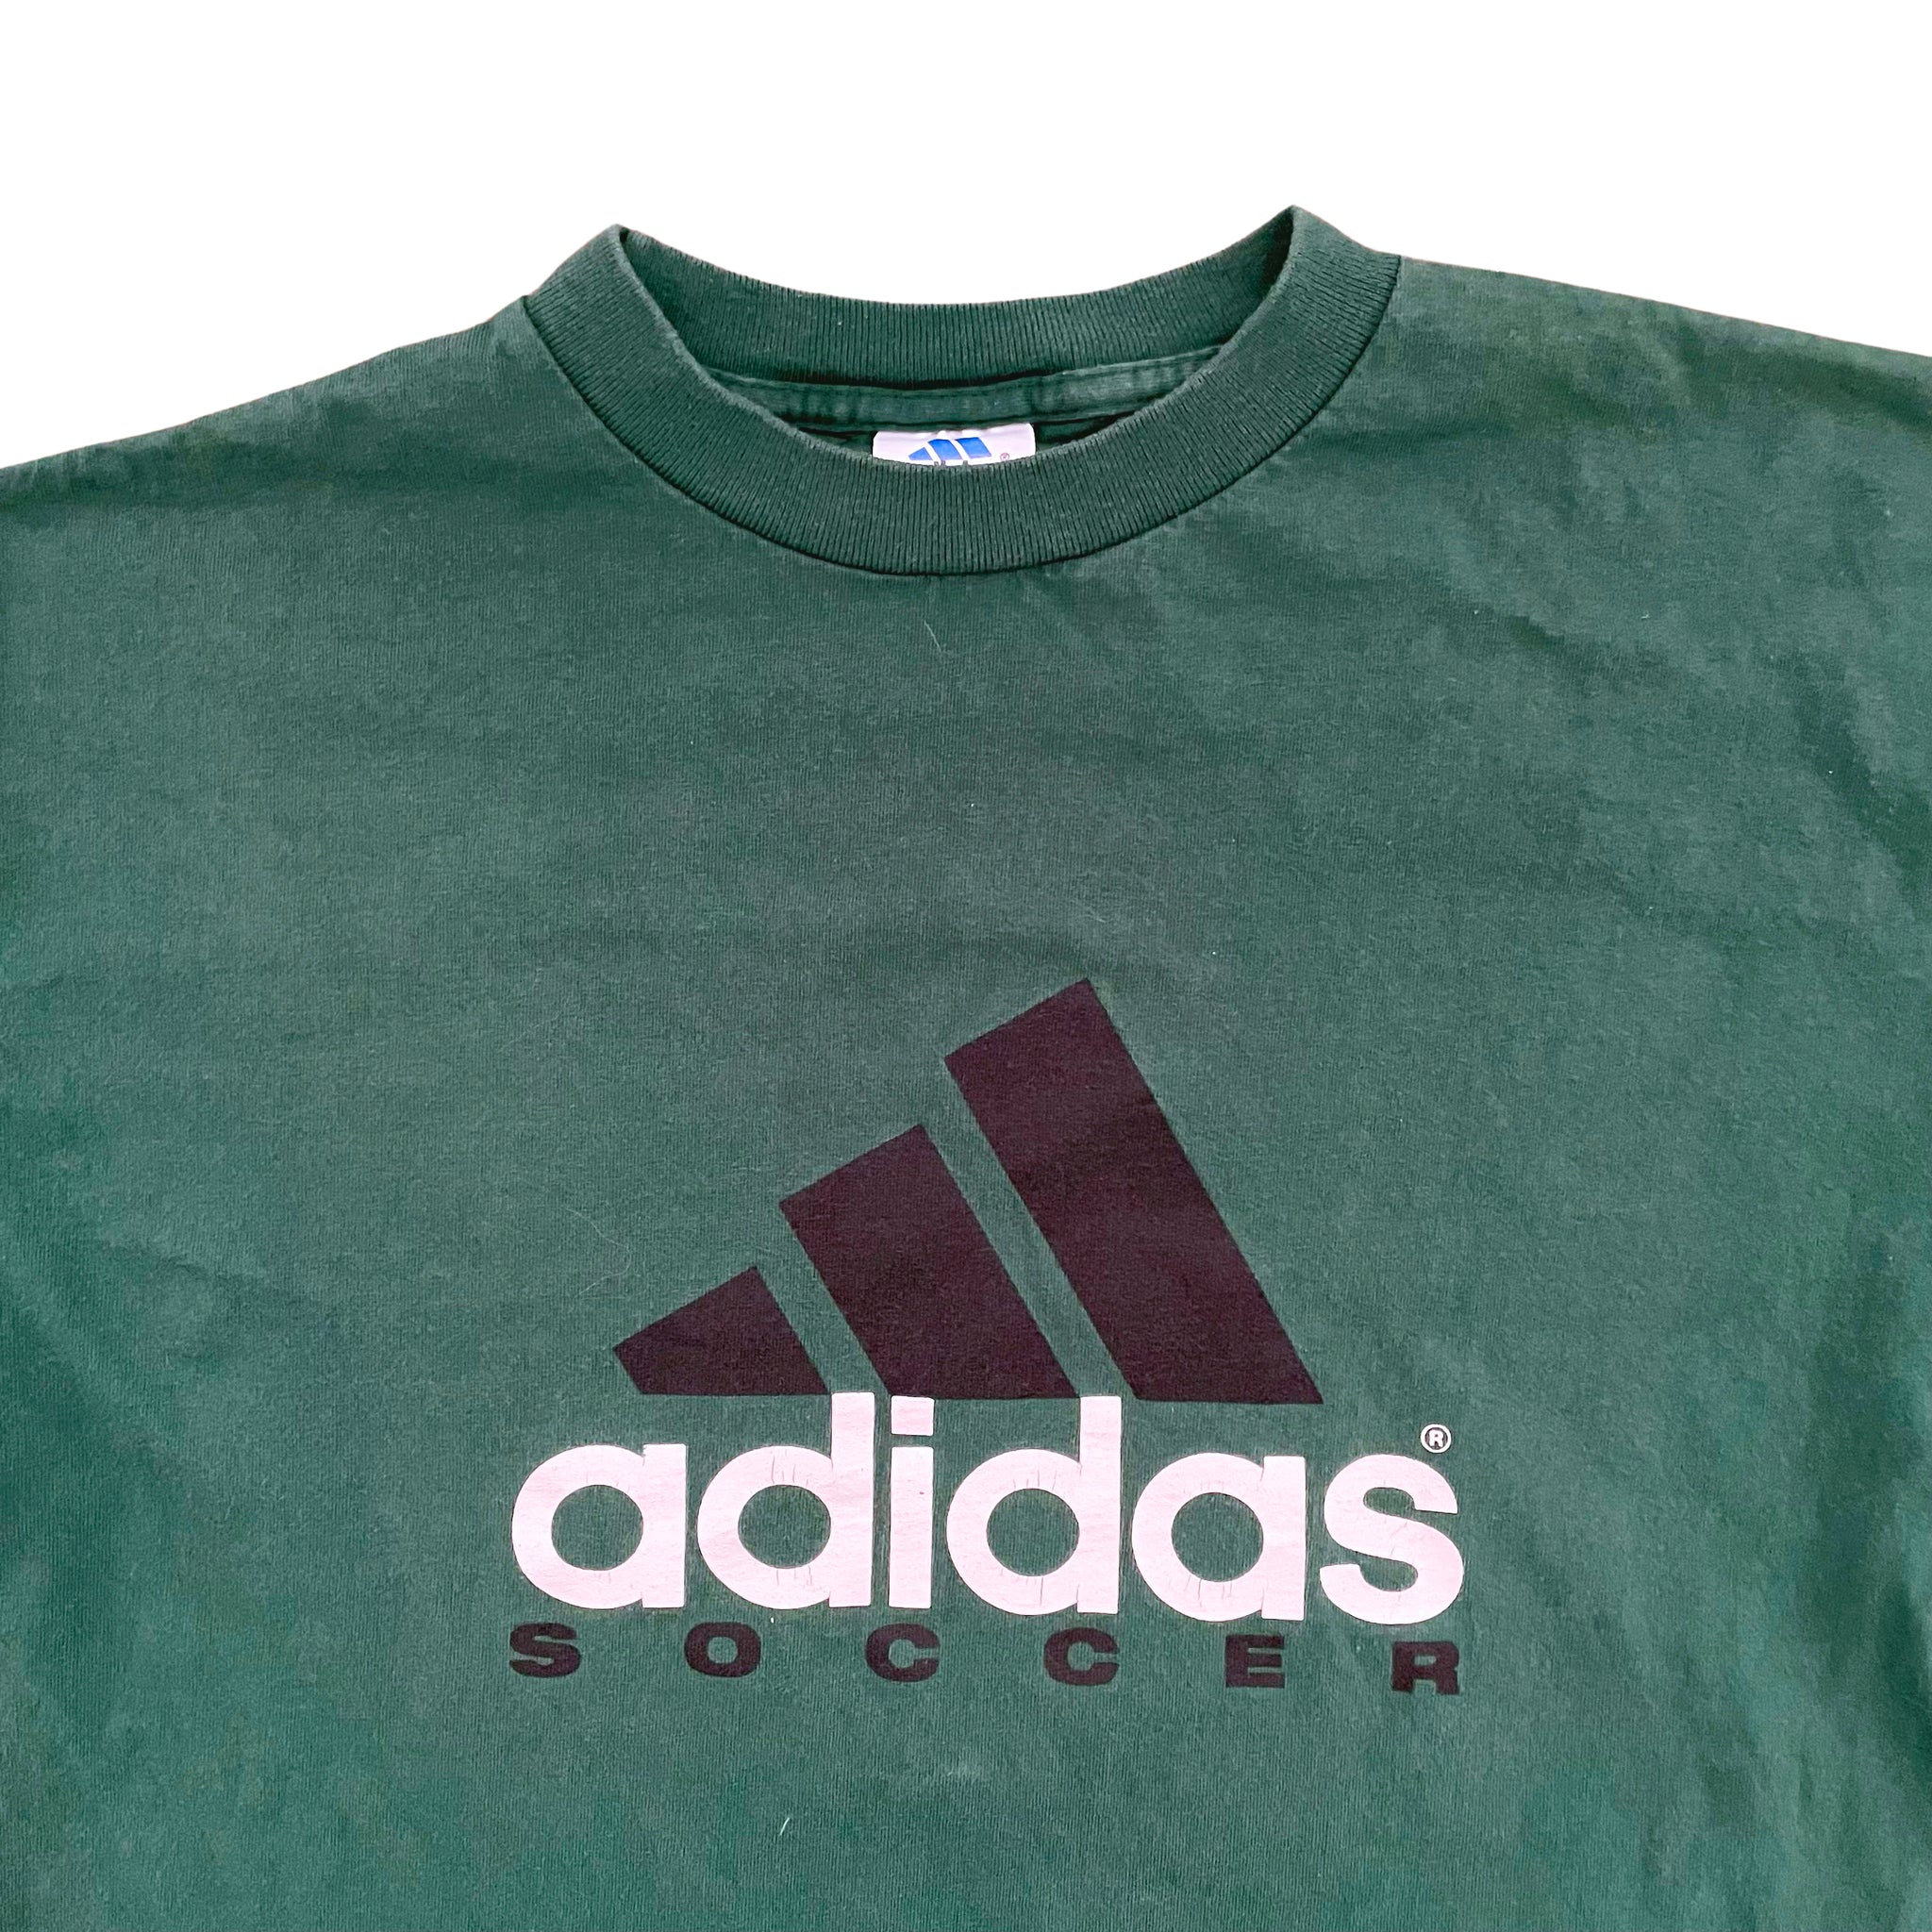 Adidas Soccer Graphic T-Shirt - L